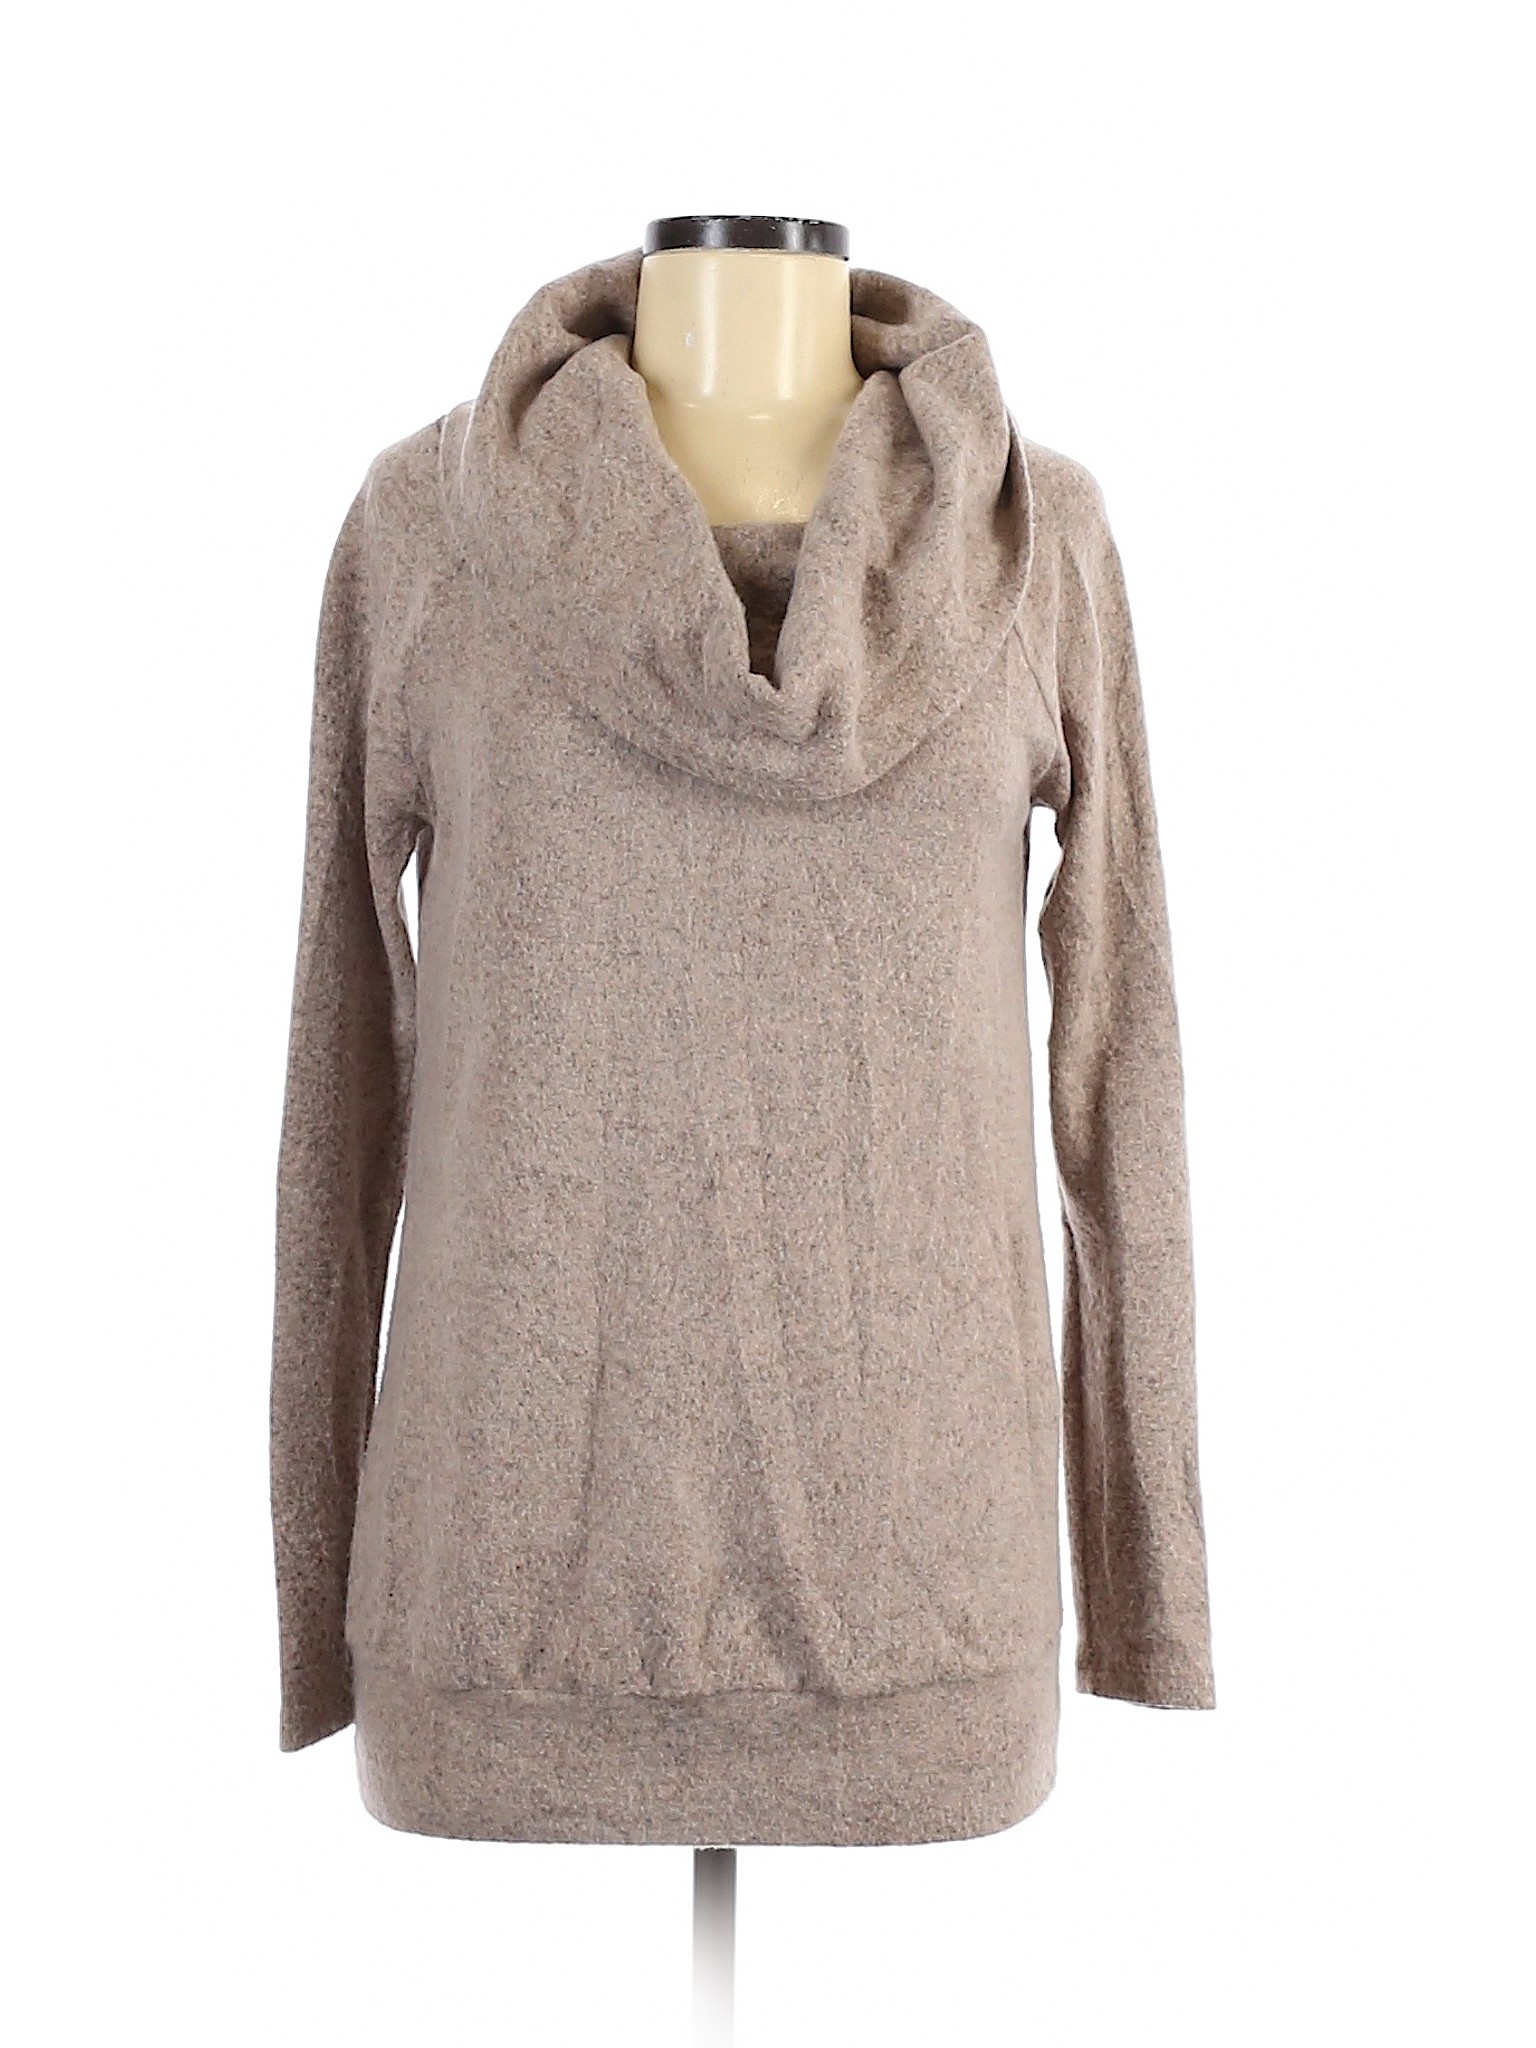 Cherish Women Brown Pullover Sweater M | eBay